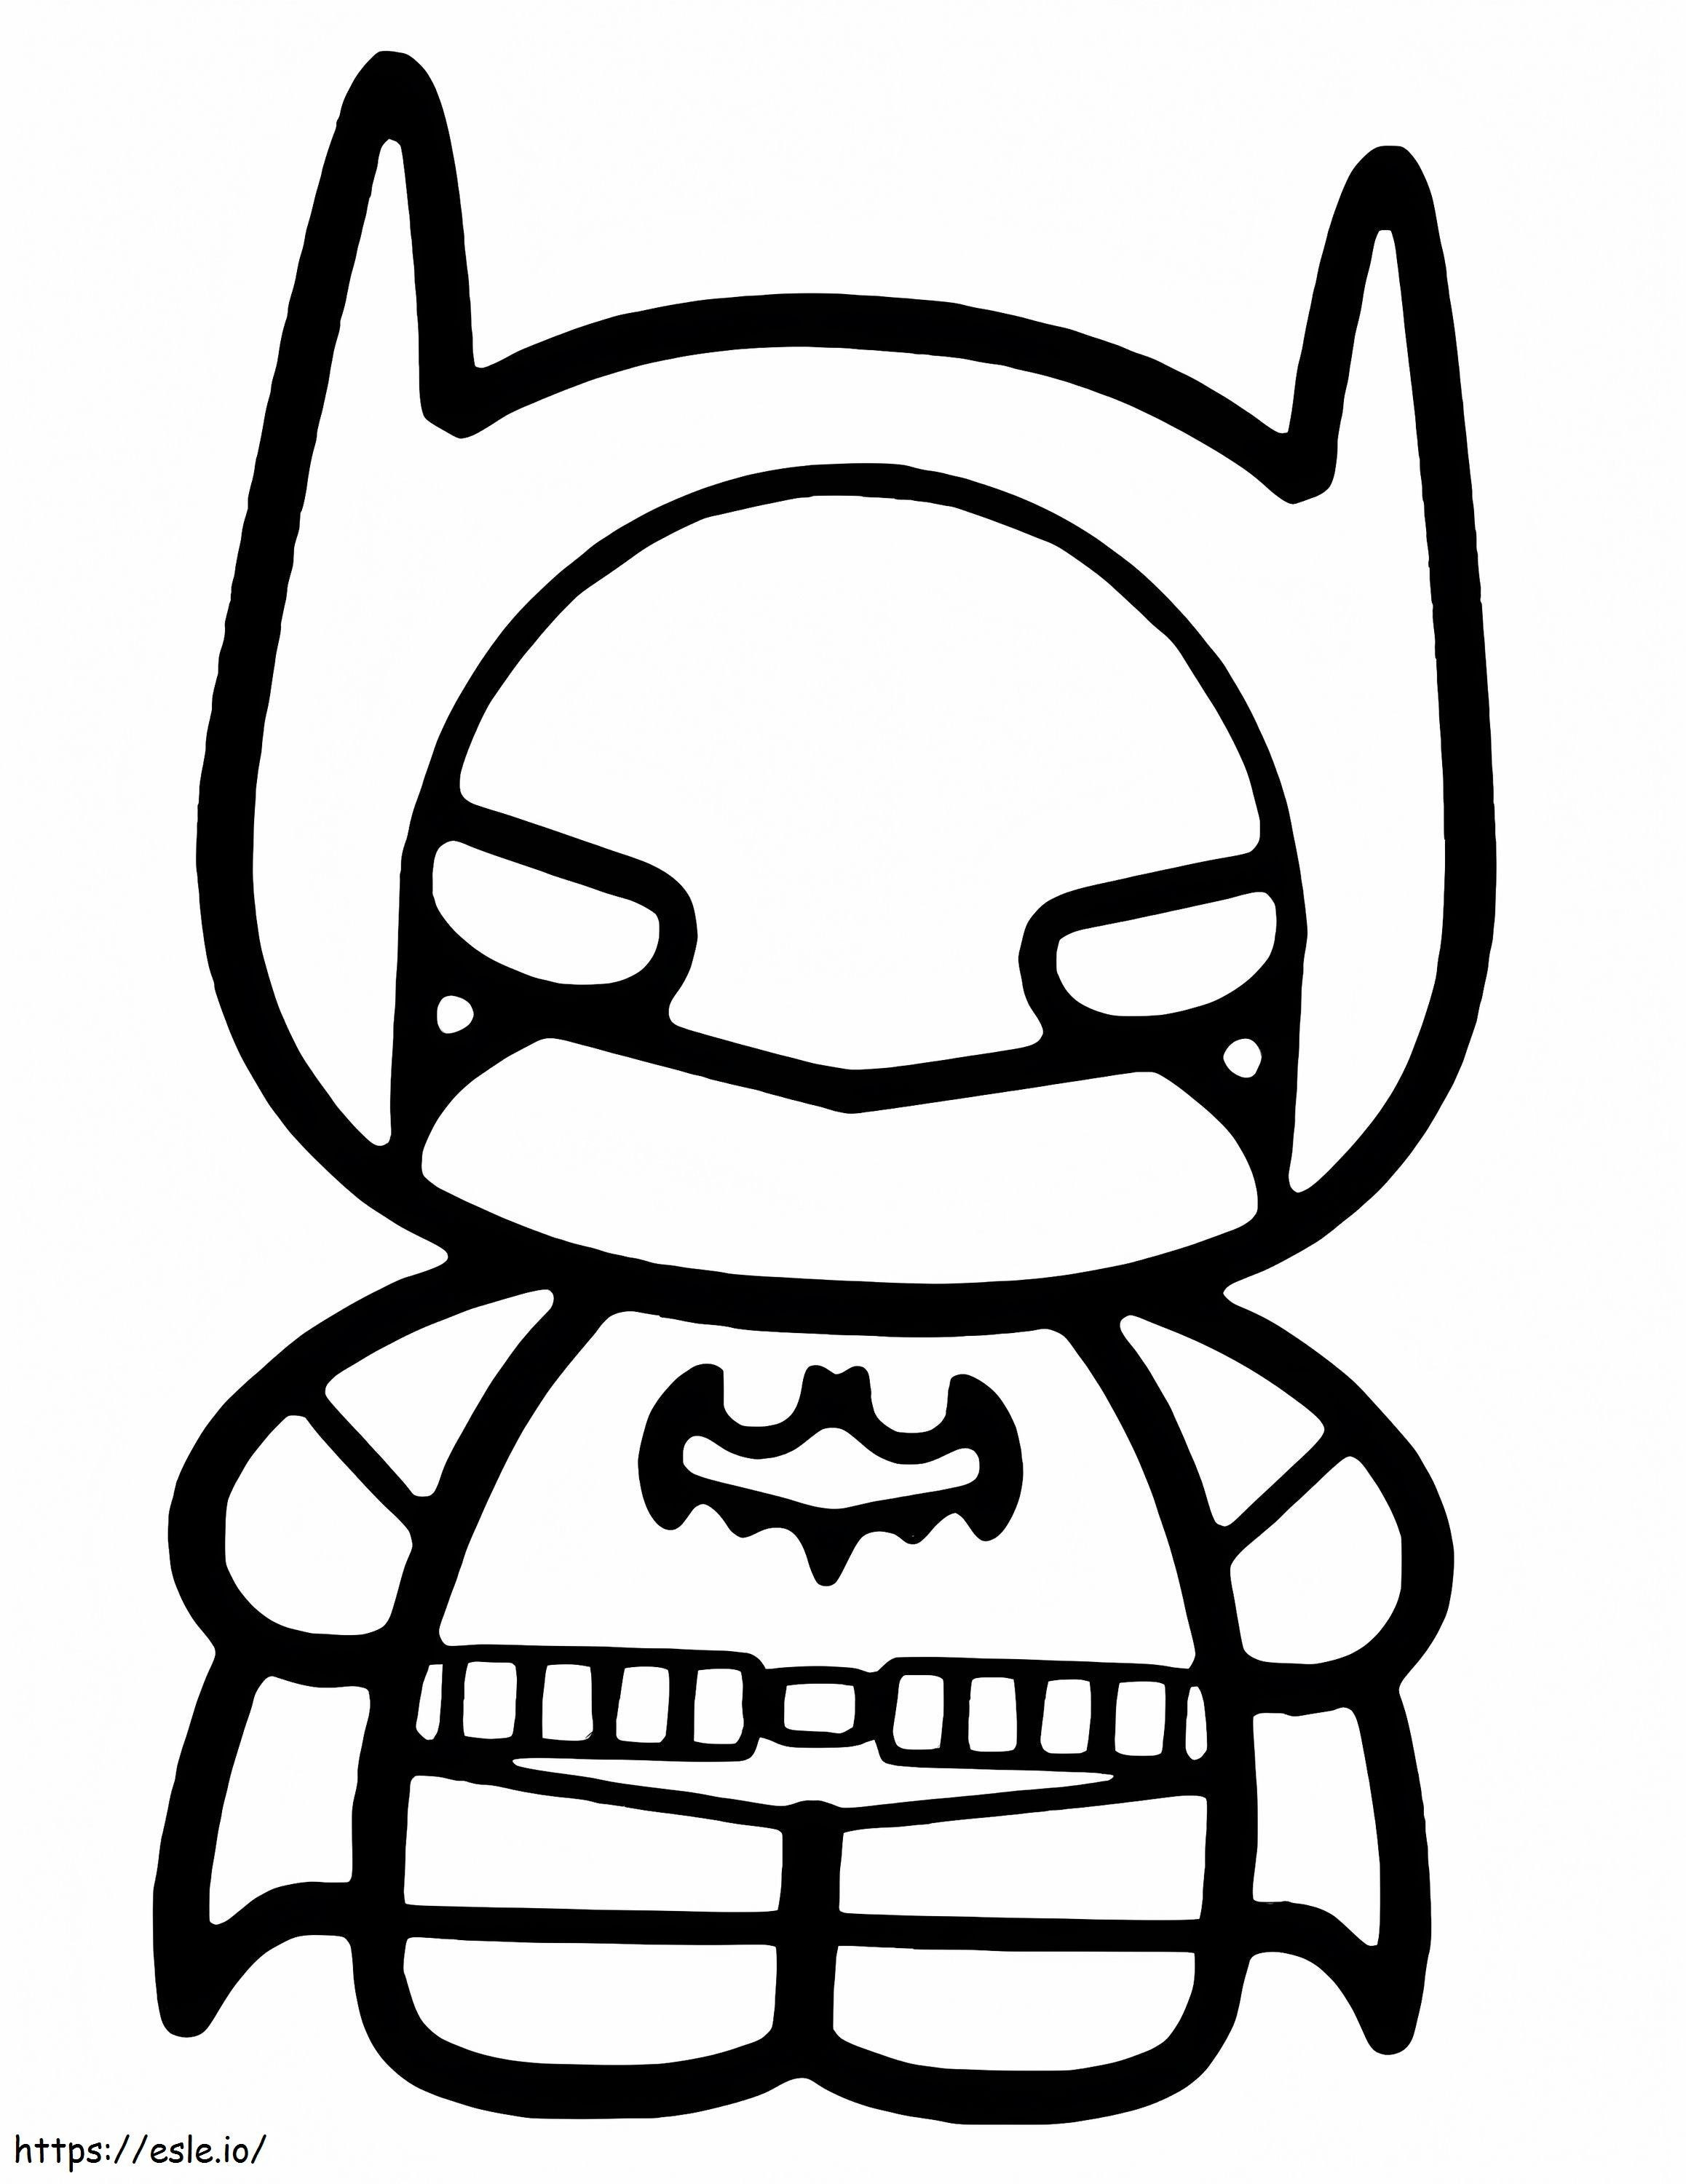 Coloriage Batman mignon à imprimer dessin